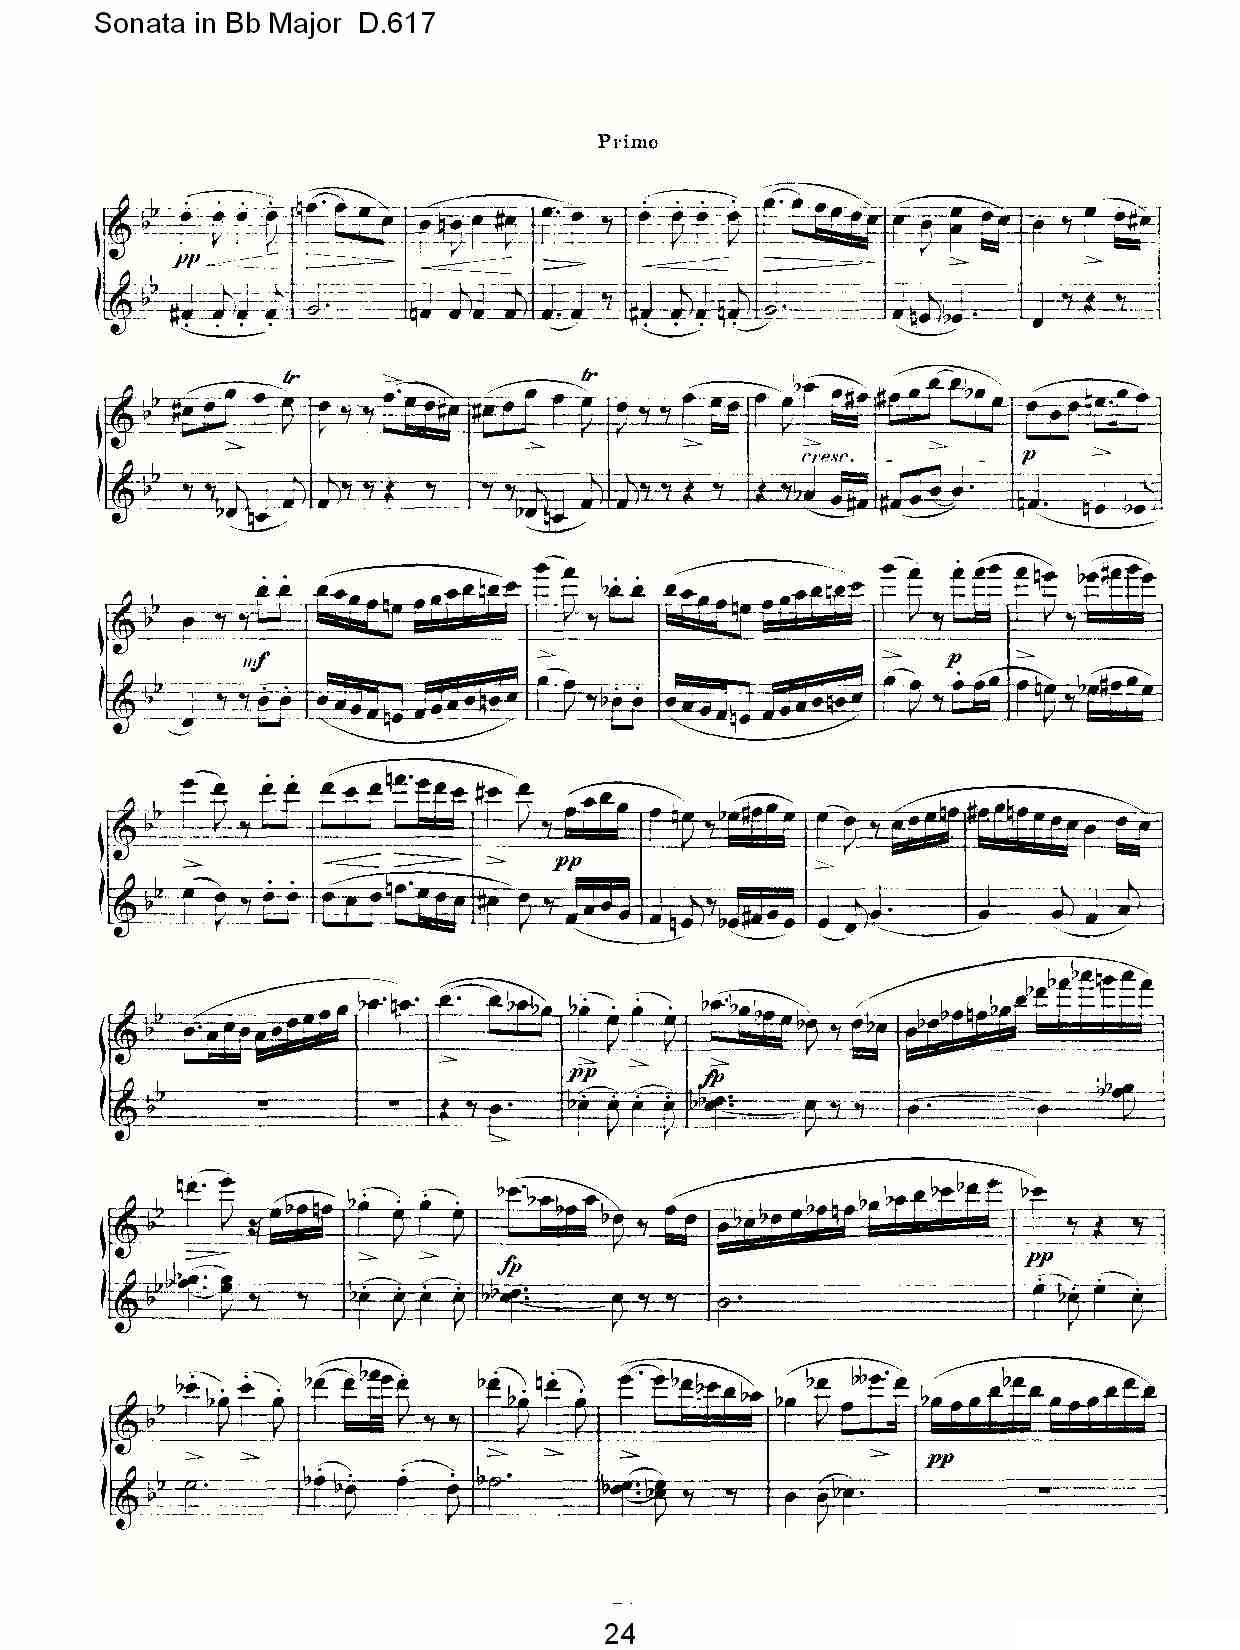 Sonata in Bb Major D.617（Bb大调奏鸣曲 D.617）钢琴曲谱（图24）